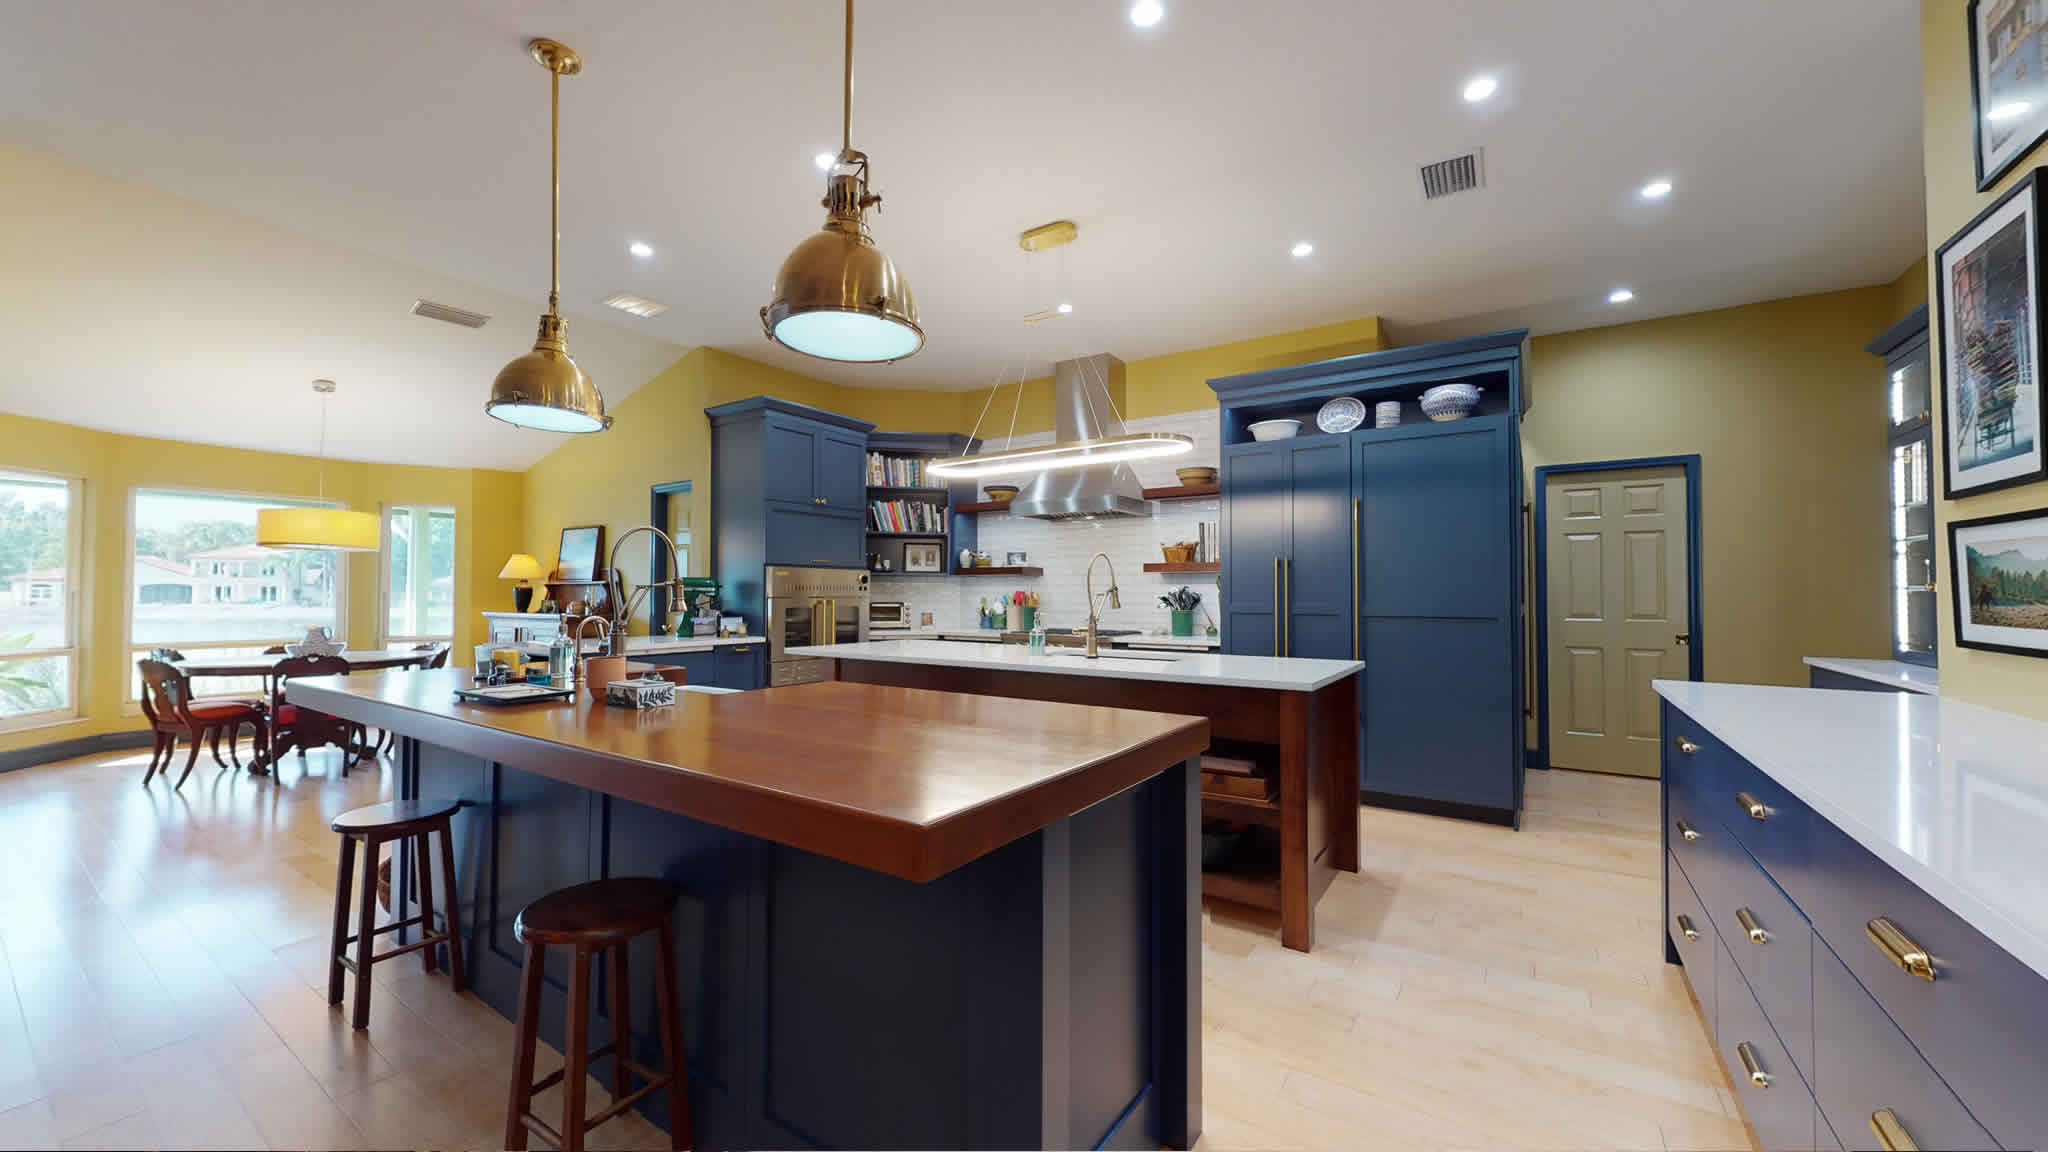 Sleek modern kitchen with eating area